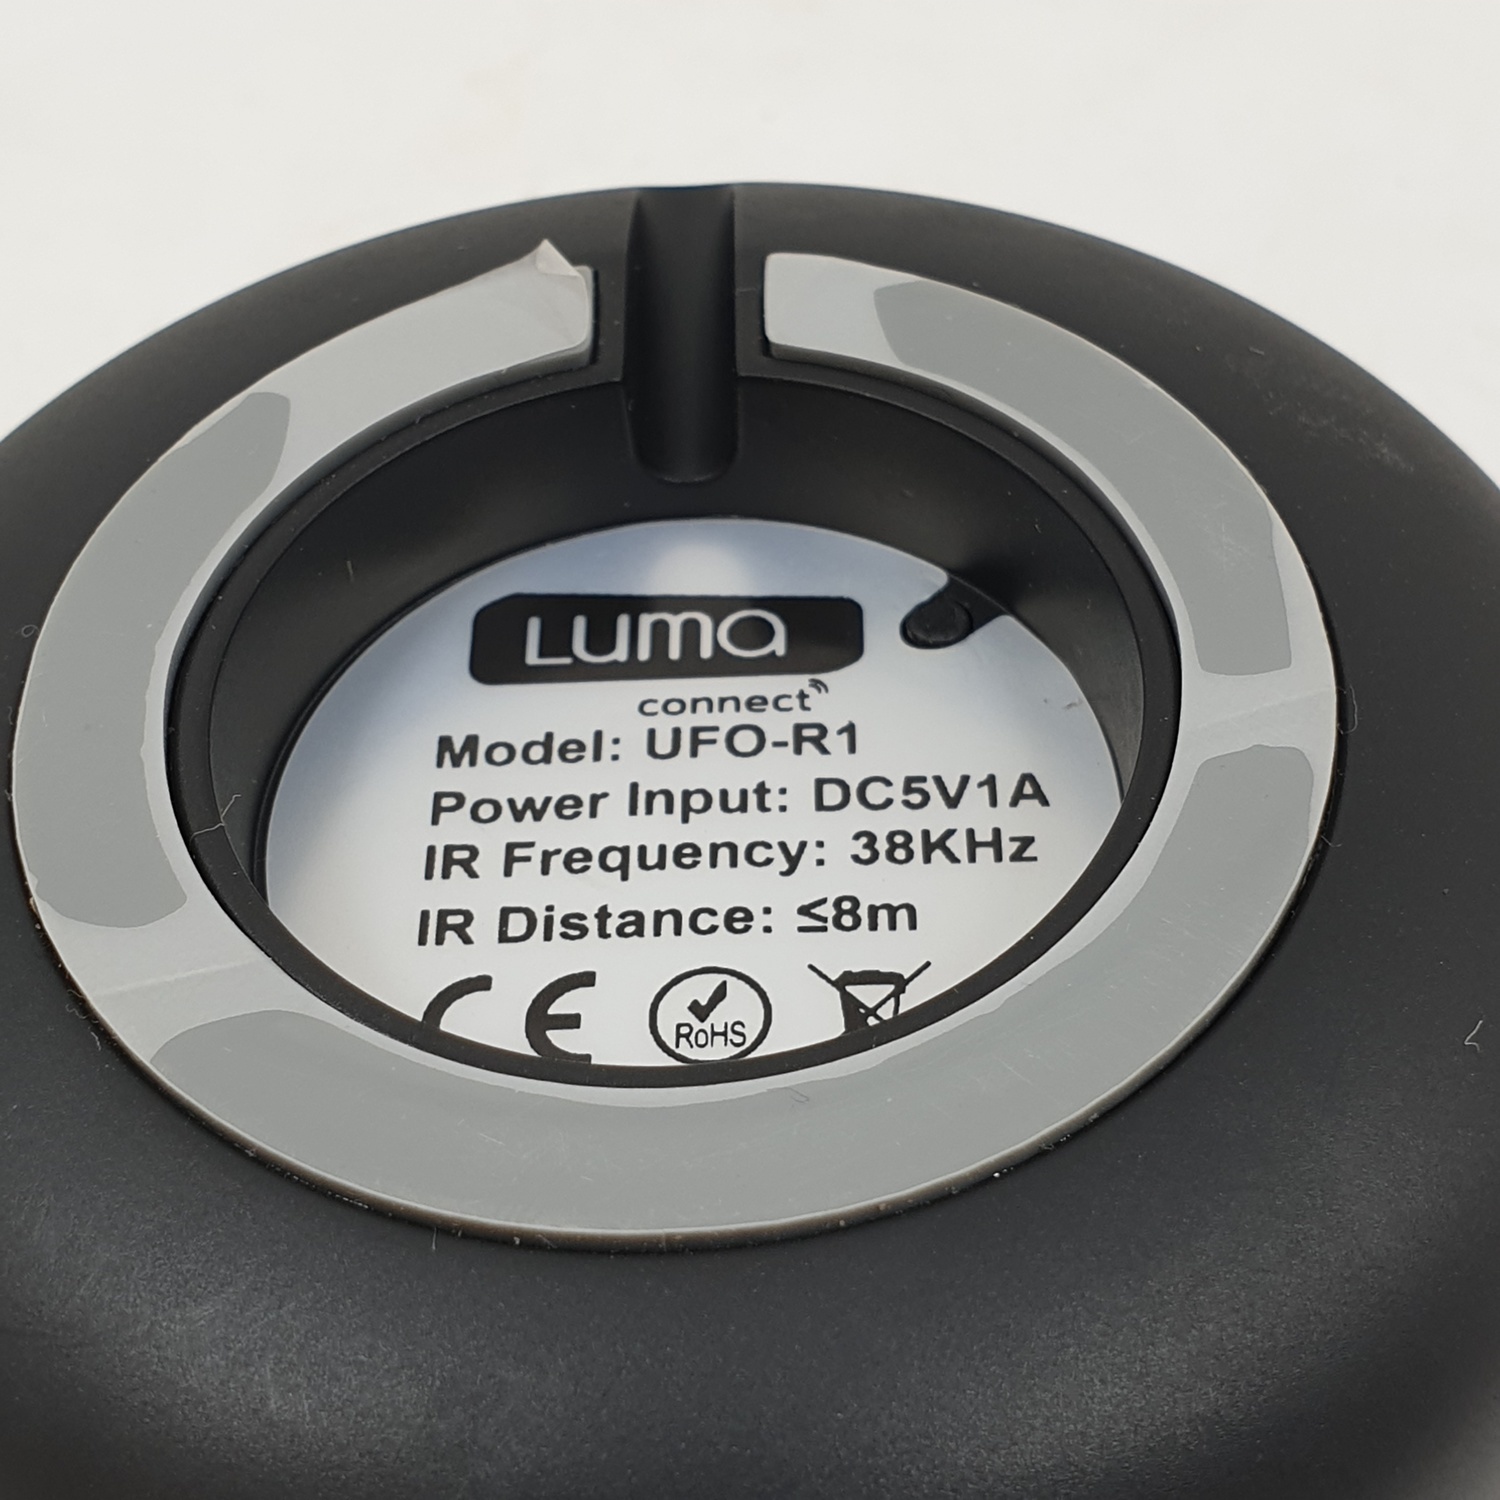 Luma Connect กล่องควบคุมรีโมท WI-FI รุ่น UFO-R1 สีดำ